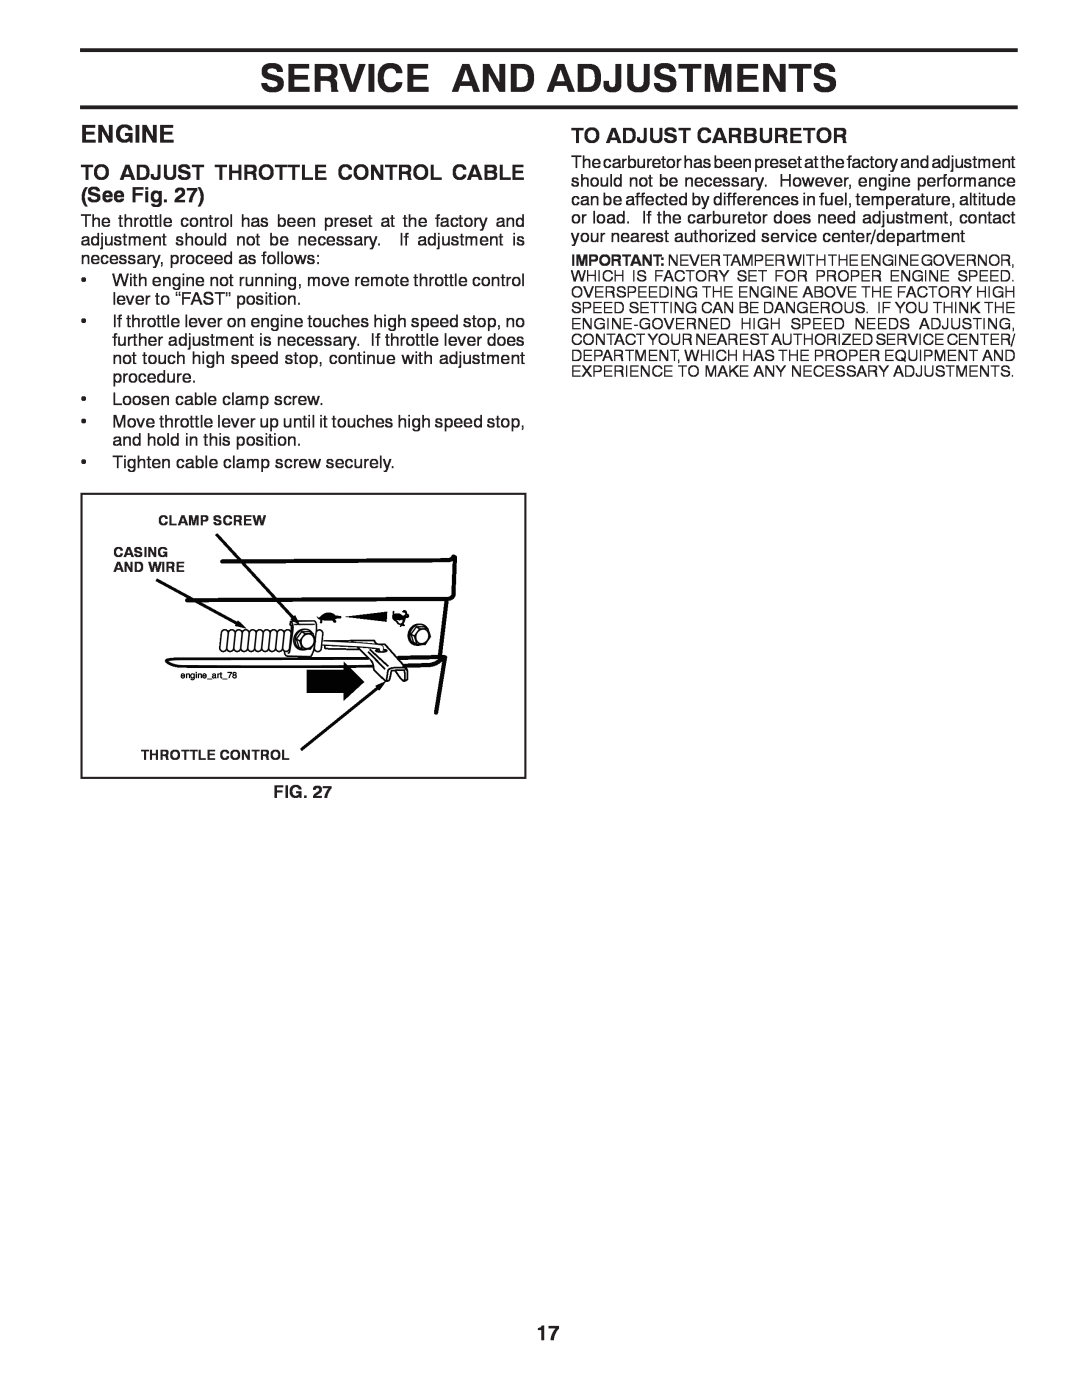 Poulan PRRT850 manual TO ADJUST THROTTLE CONTROL CABLE See Fig, To Adjust Carburetor, Service And Adjustments, Engine 